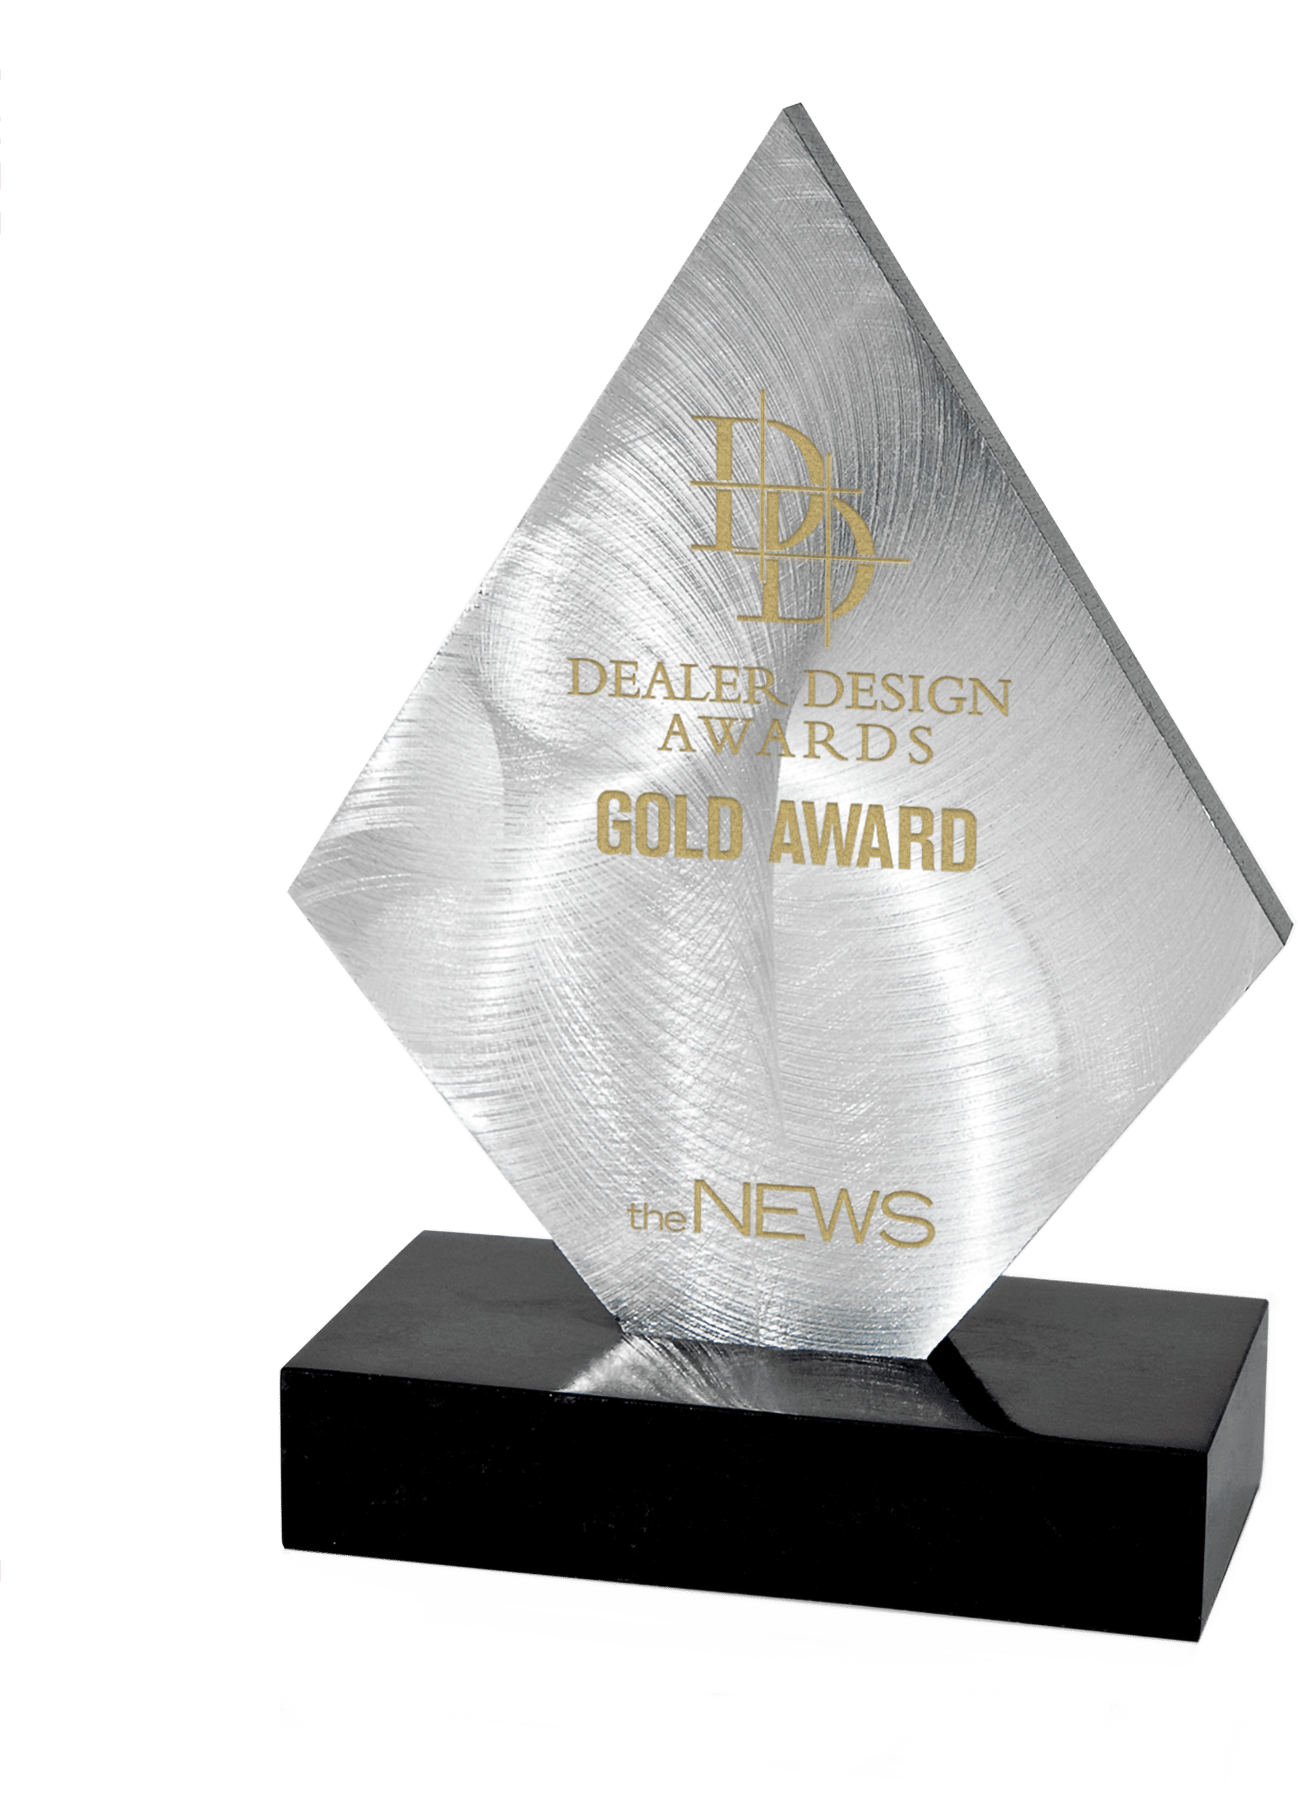 Award sculpture for The NEWS&#x27; Dealer Design Awards